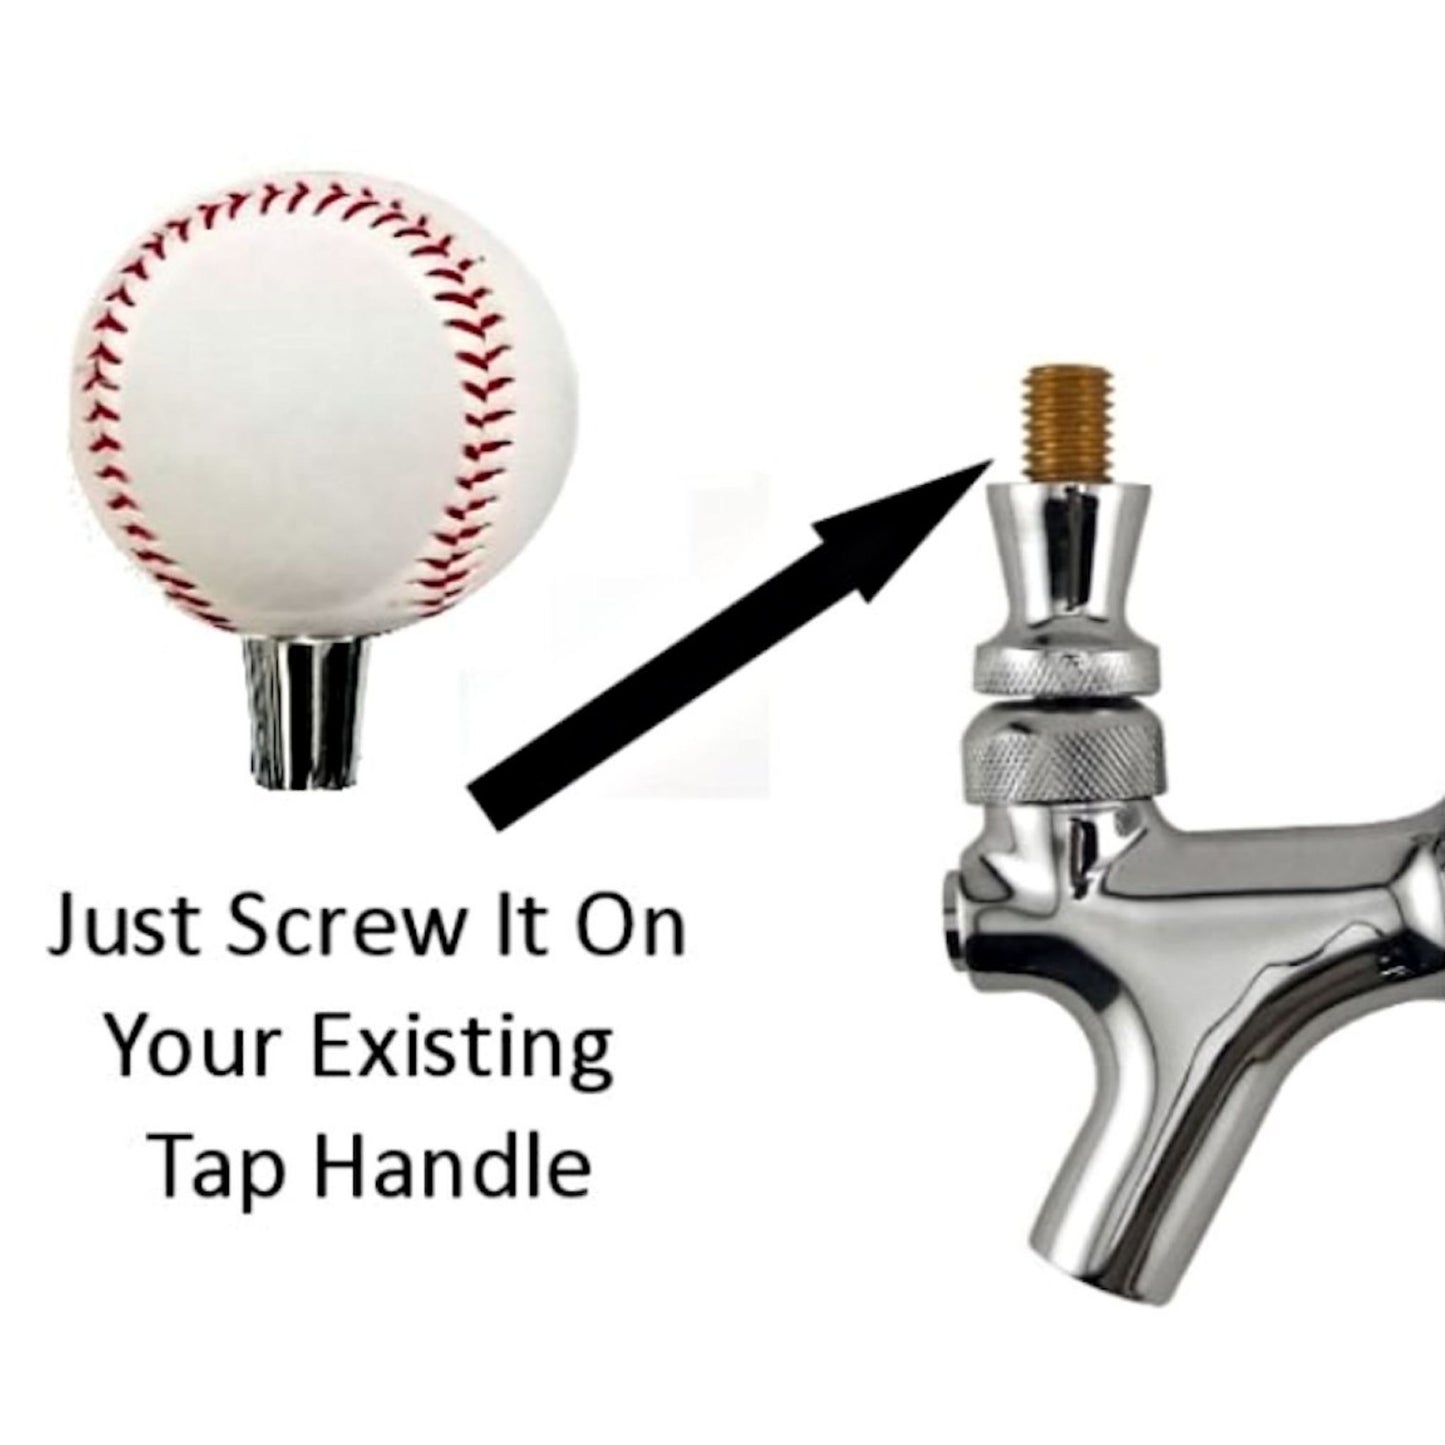 Houston Astros Baseball Beer Tap Handle